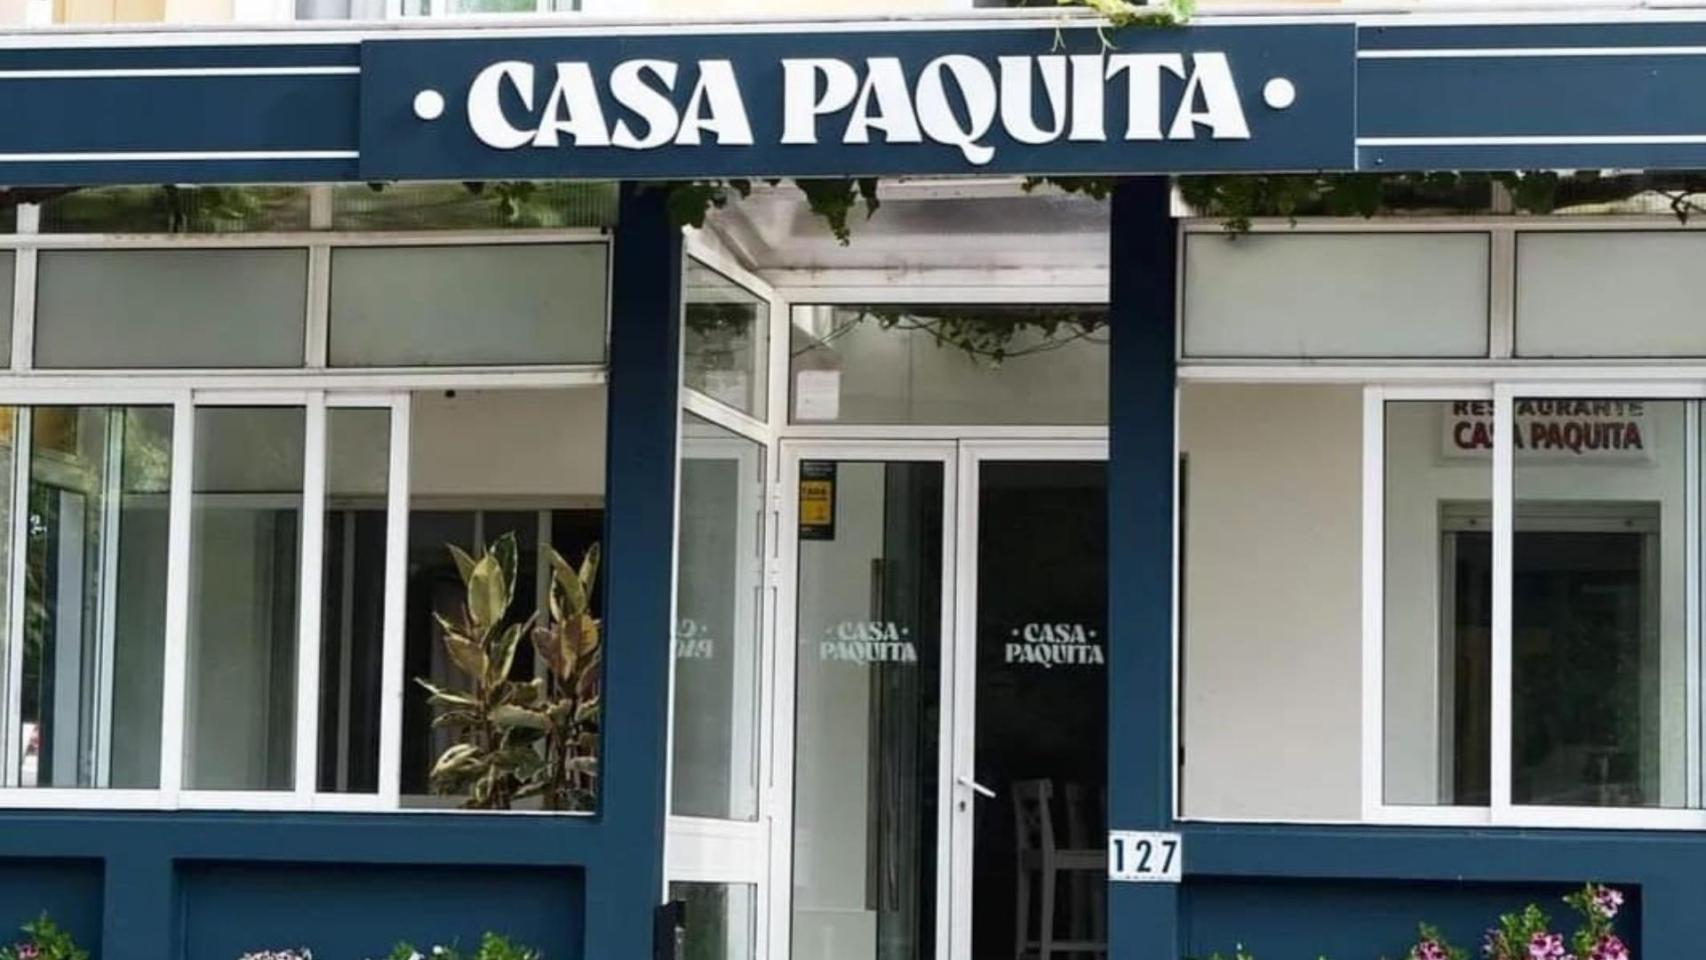 Casa Paquita.